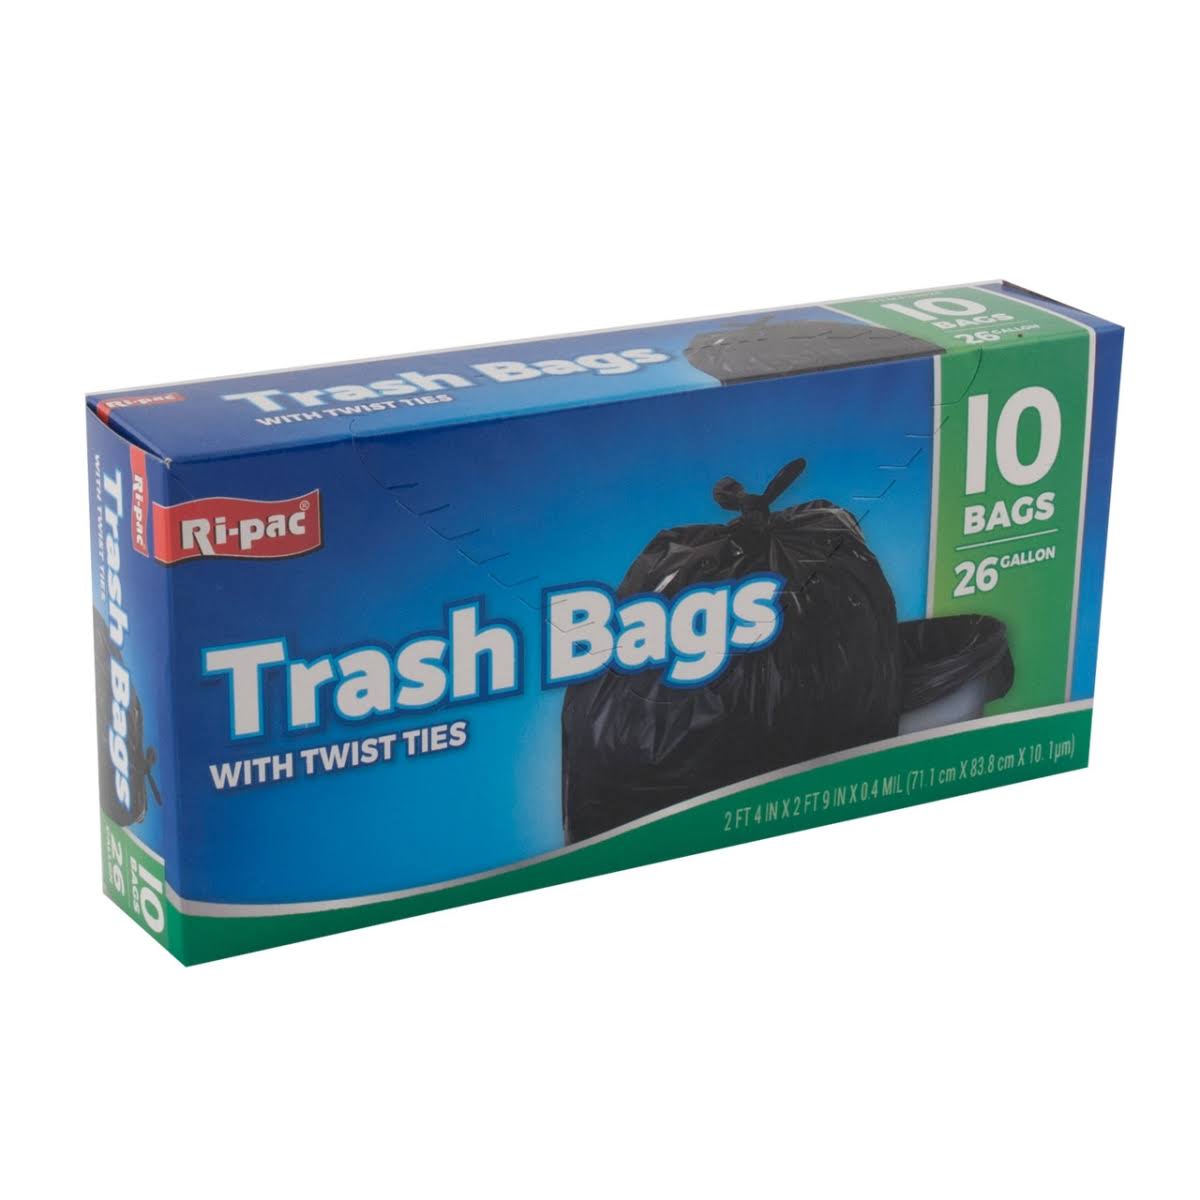 Trash Bags 10 ct - 26 Gal Black, Case Pack of 24